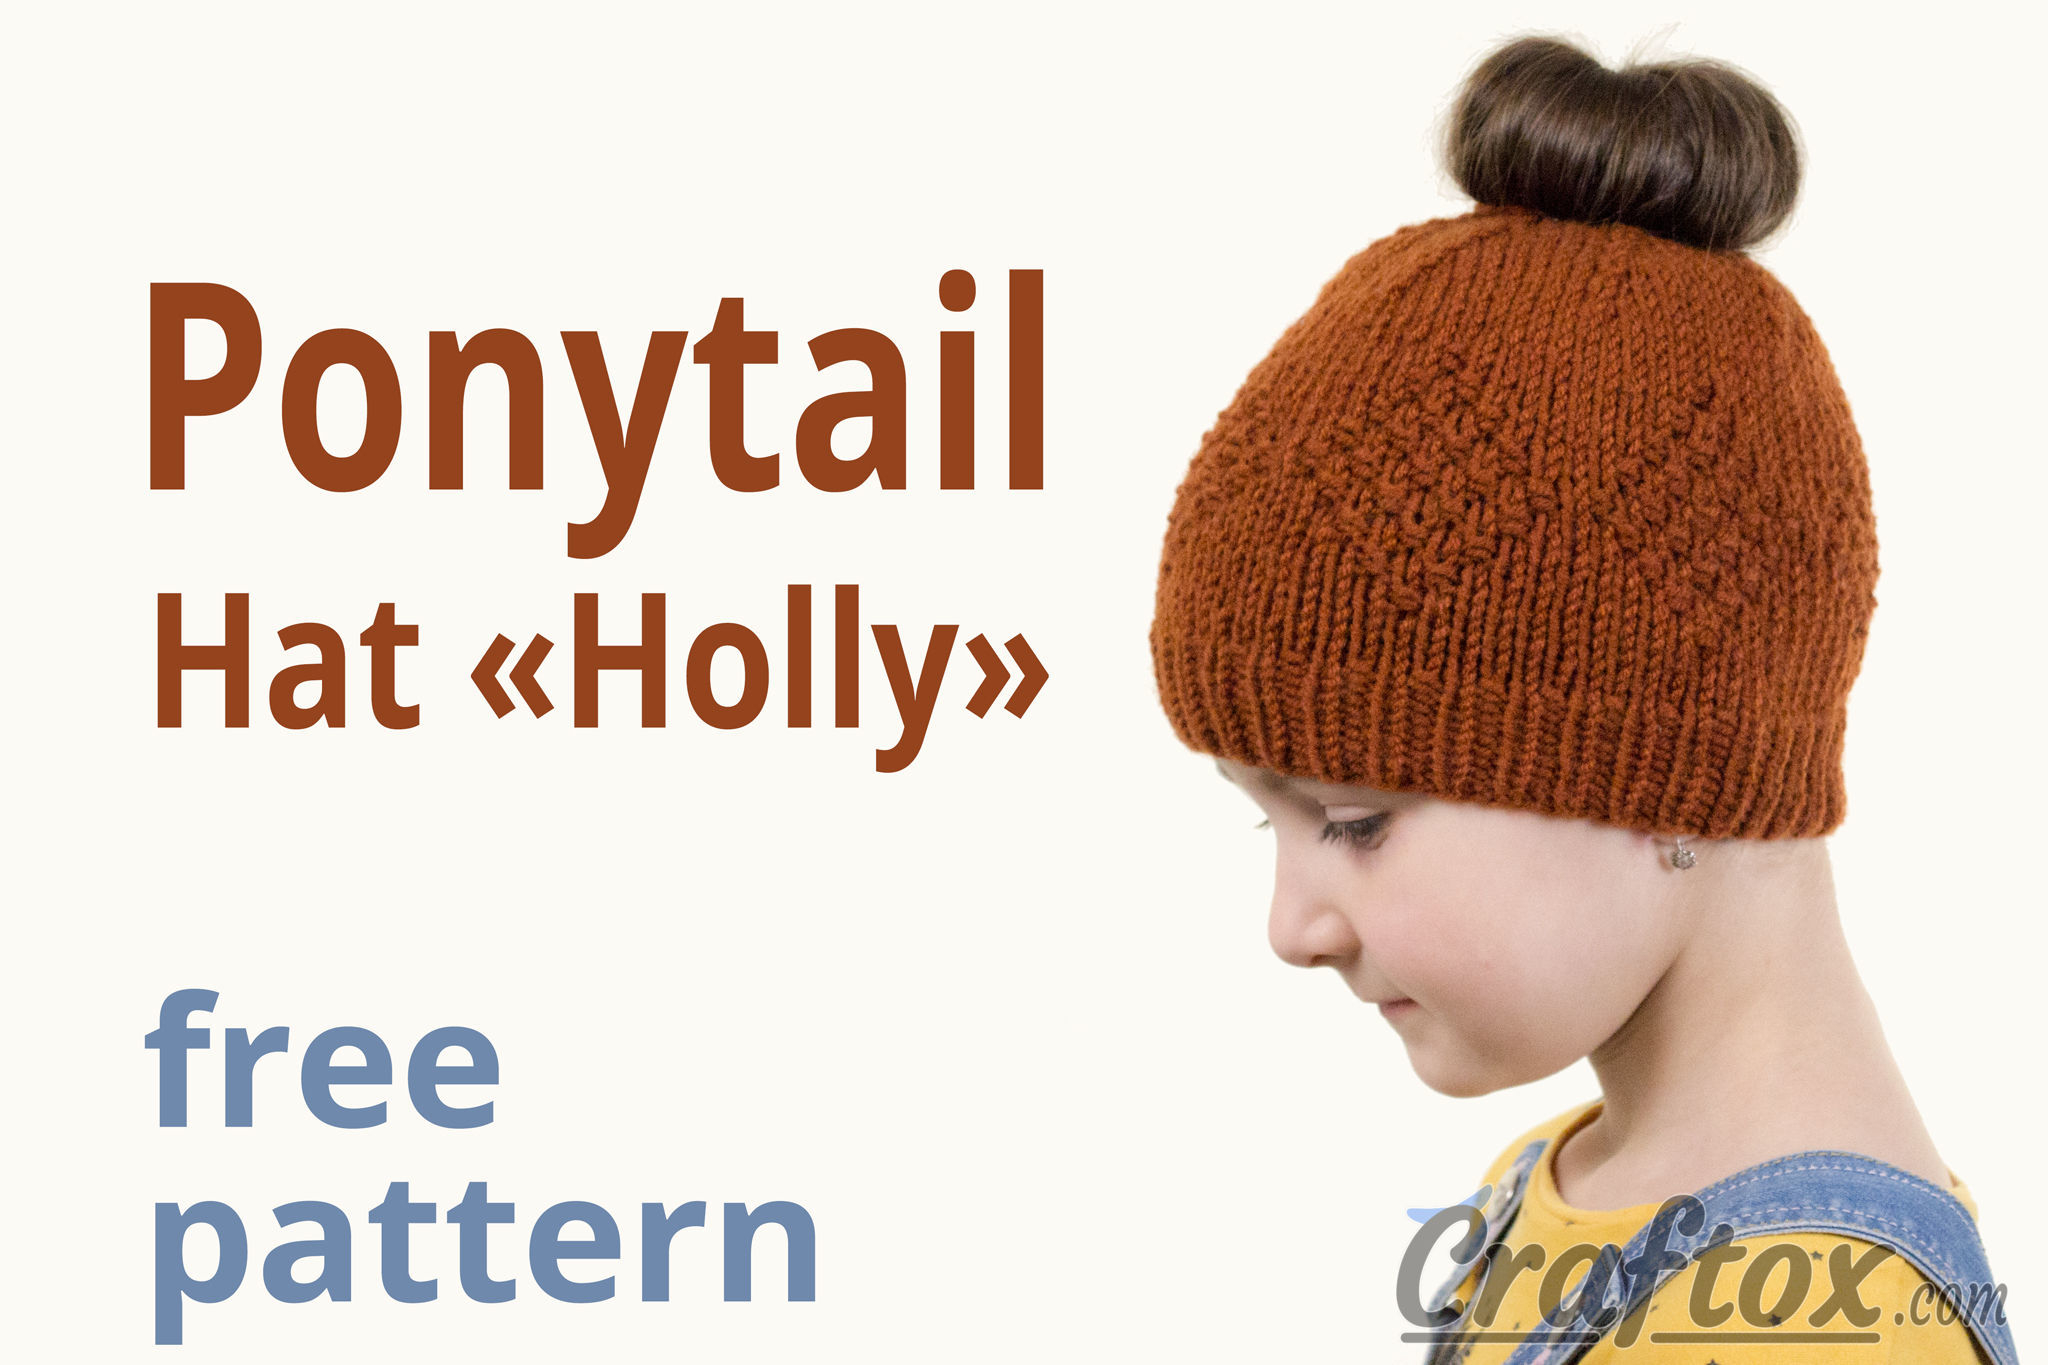 Ponytail Crochet Hat Pattern Free Ponytail Hat Holly Free Knitting Pattern